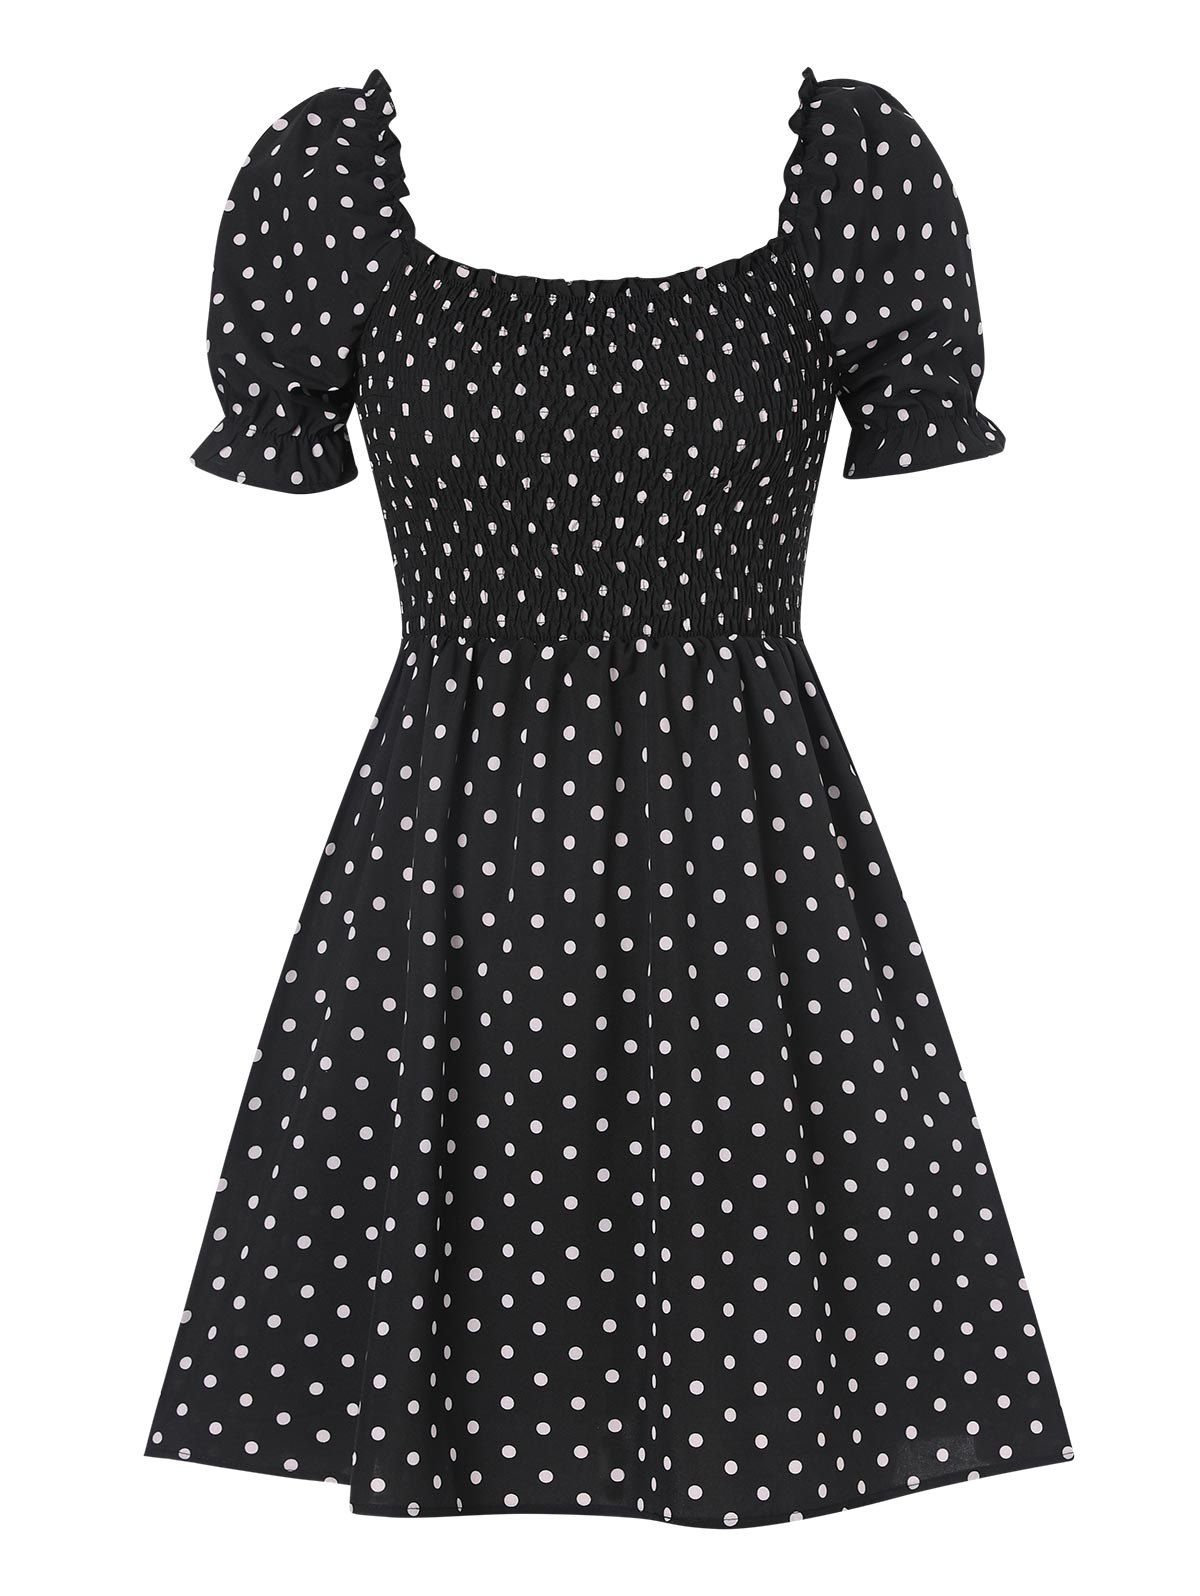 Polka Dot Puff Sleeve Smocked Dress - BLACK M